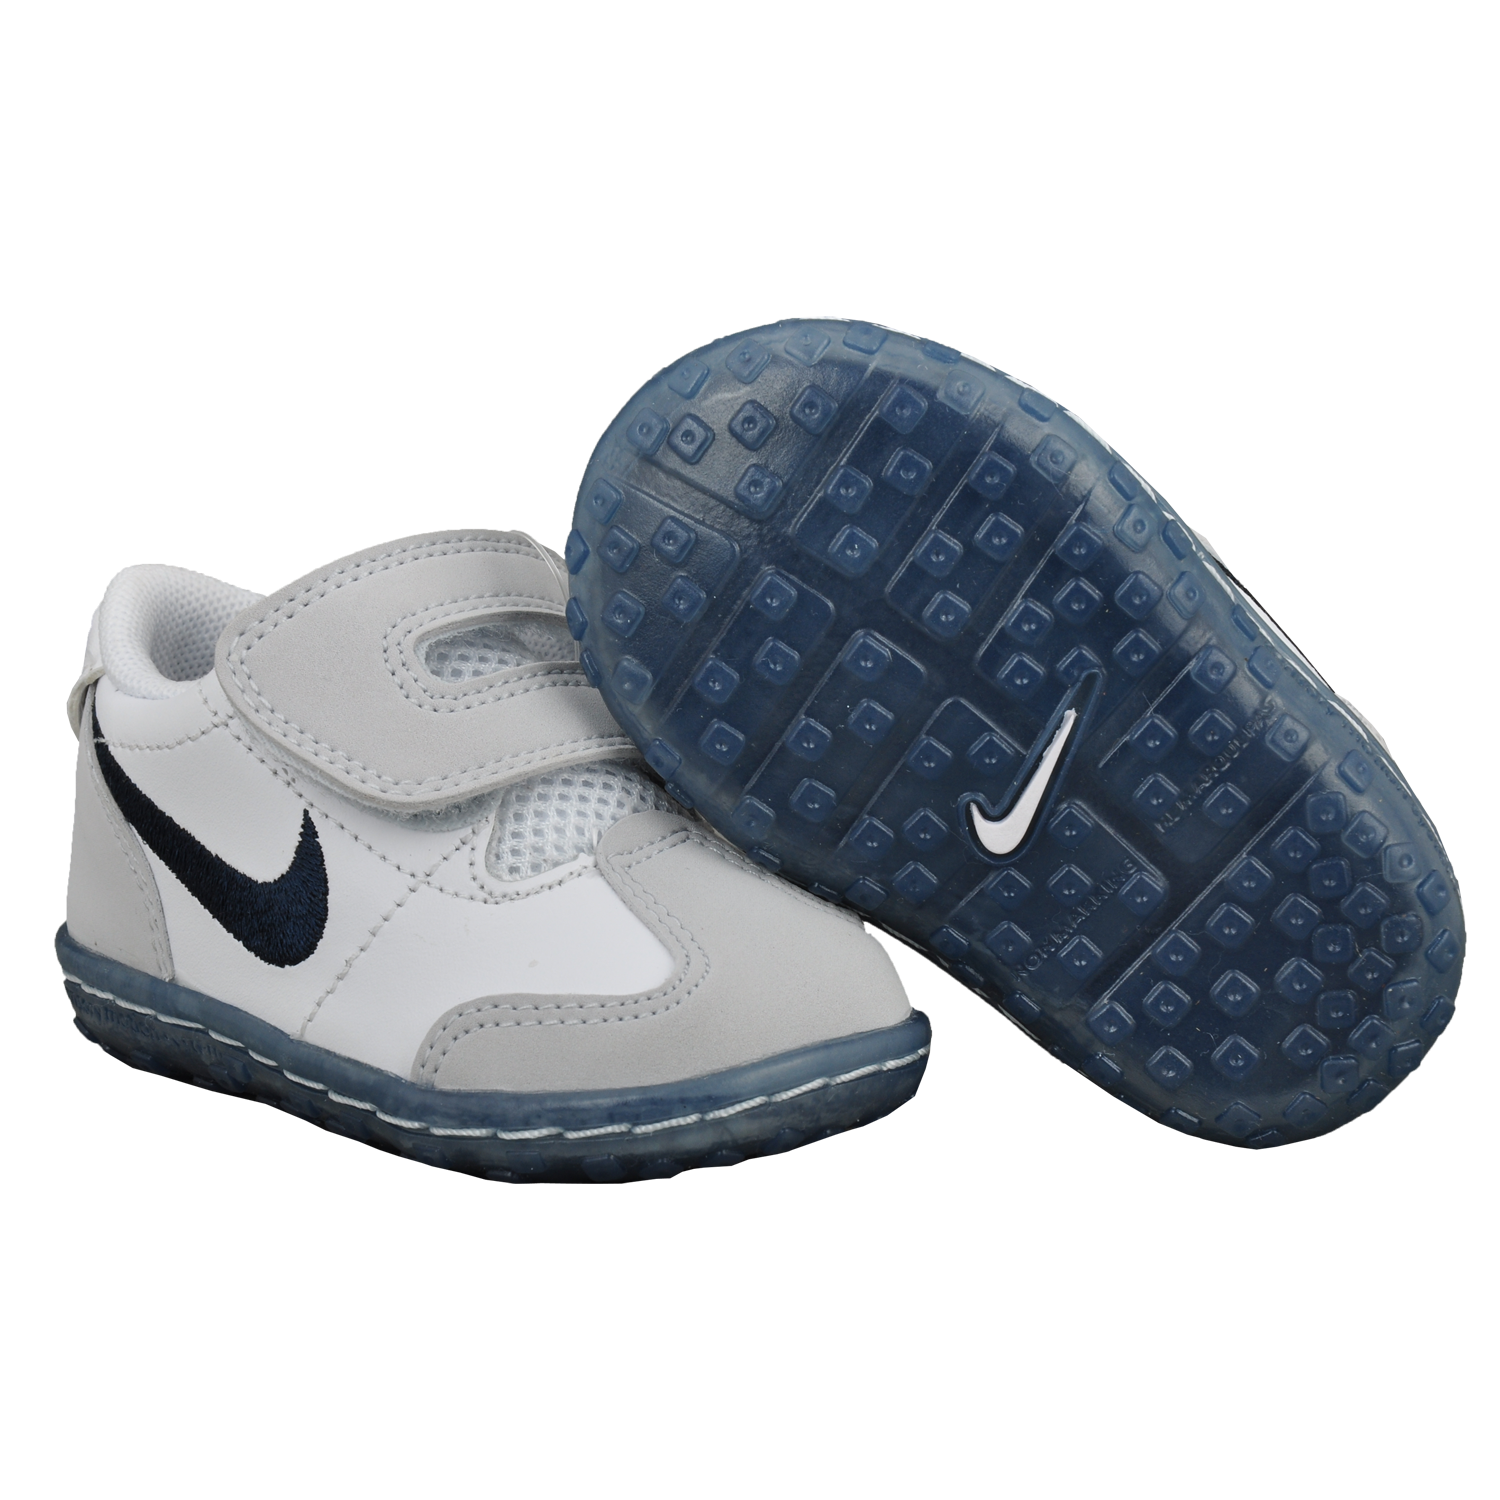 Foto Nike Shoe Sms Roadrunner 2 (tdv) Zapatos De Bebé Blanco Azul